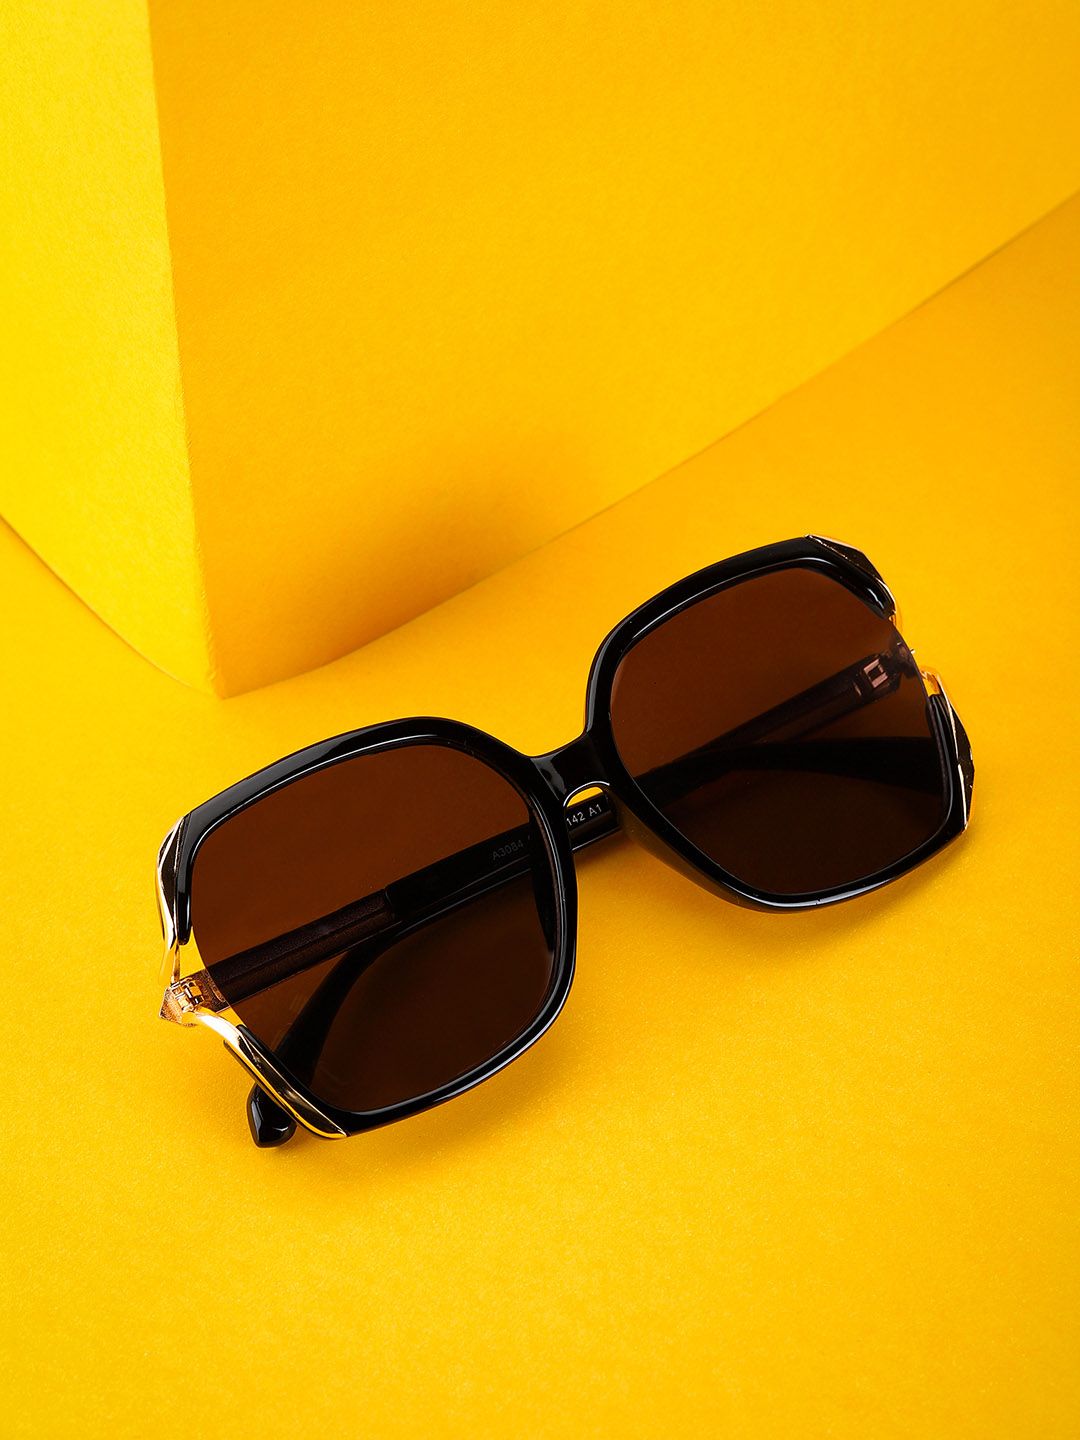 Carlton London Women UV Protected Lens Oversized Sunglasses Price in India